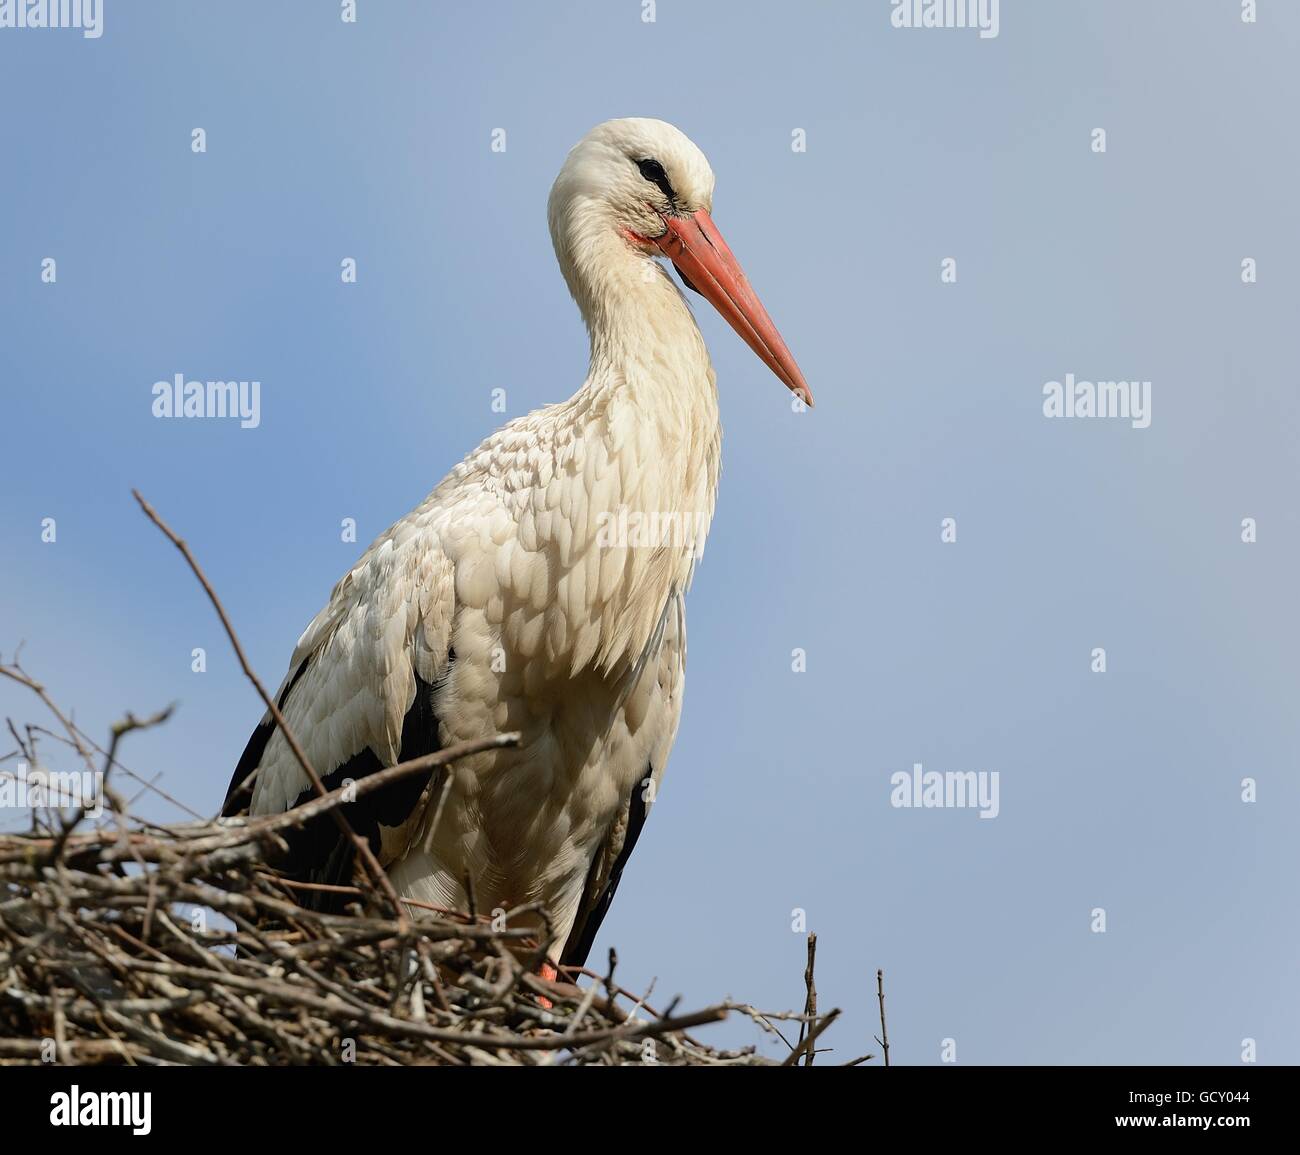 Cicogna, la cicogna bianca, Bird, trampolieri, becco, nido, Germania, animale, piume Foto Stock